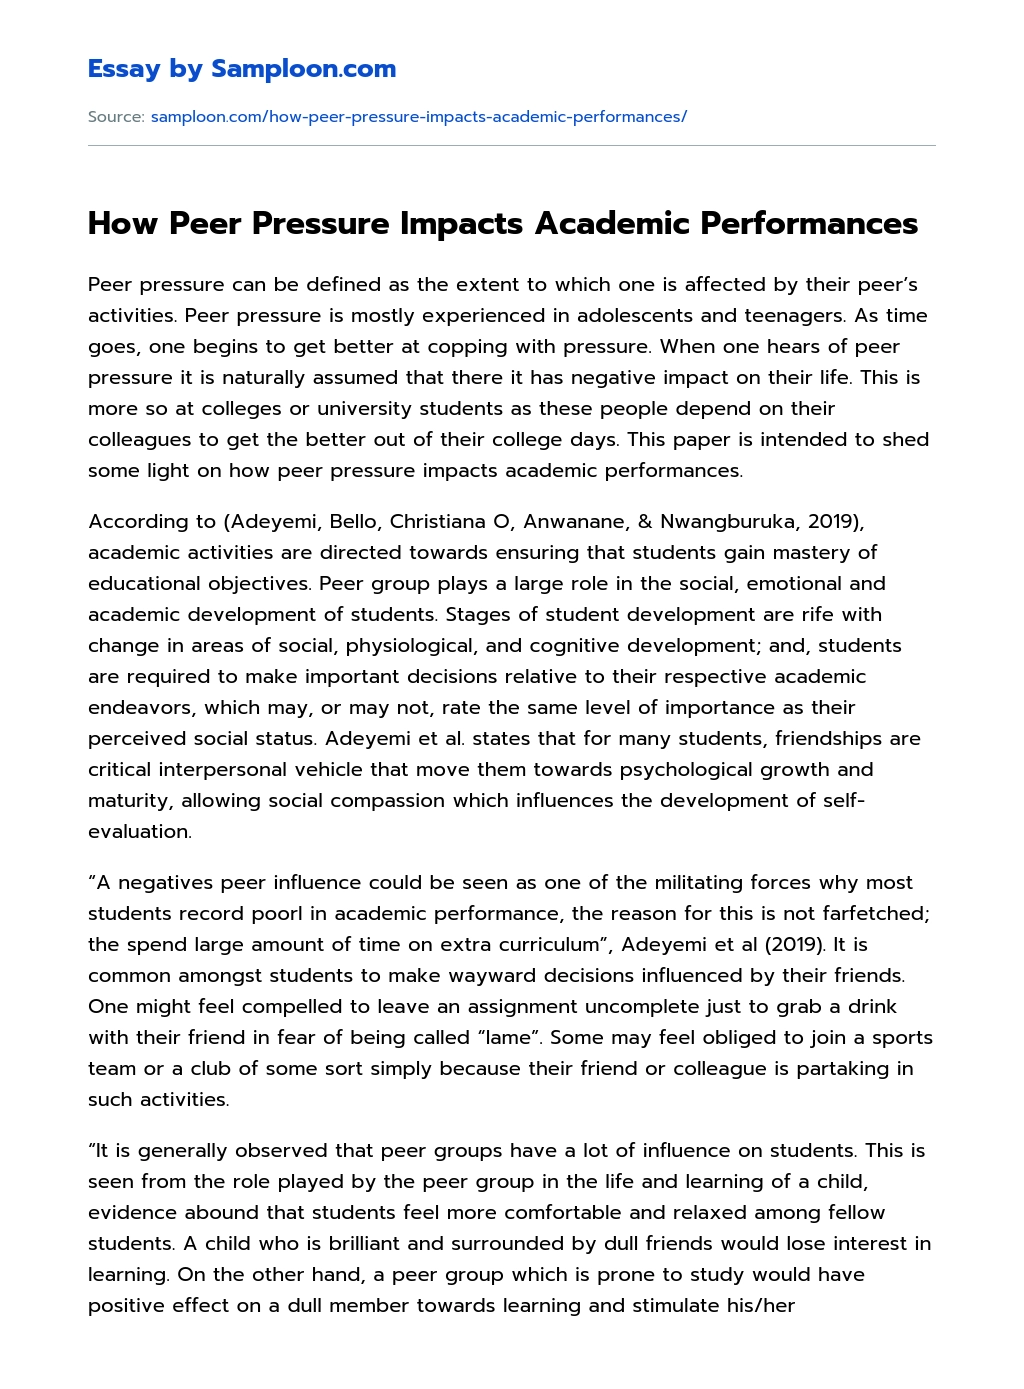 How Peer Pressure Impacts Academic Performances essay